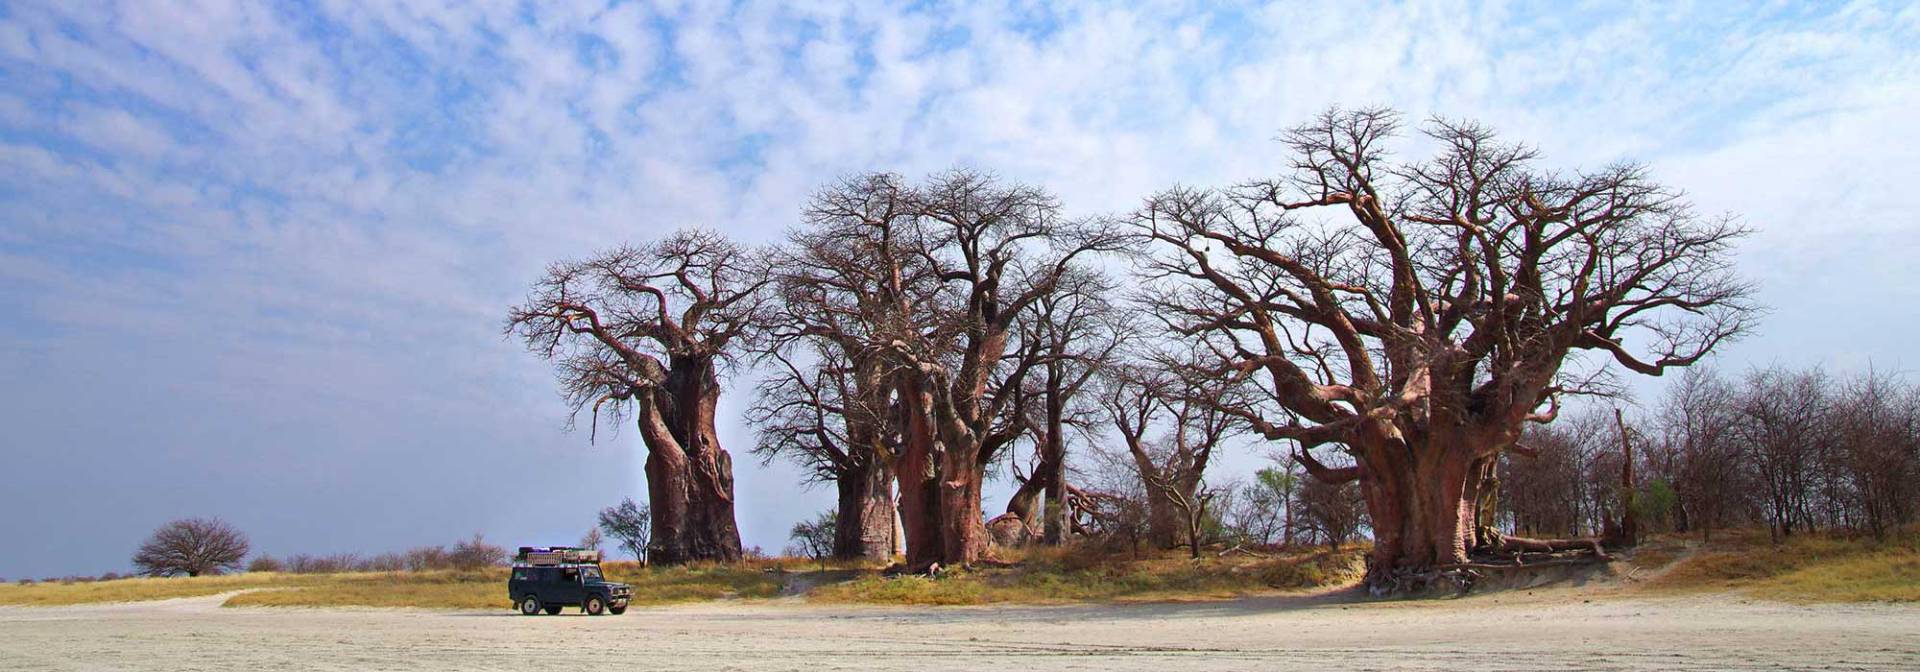 Baines Baobabs in Botswana